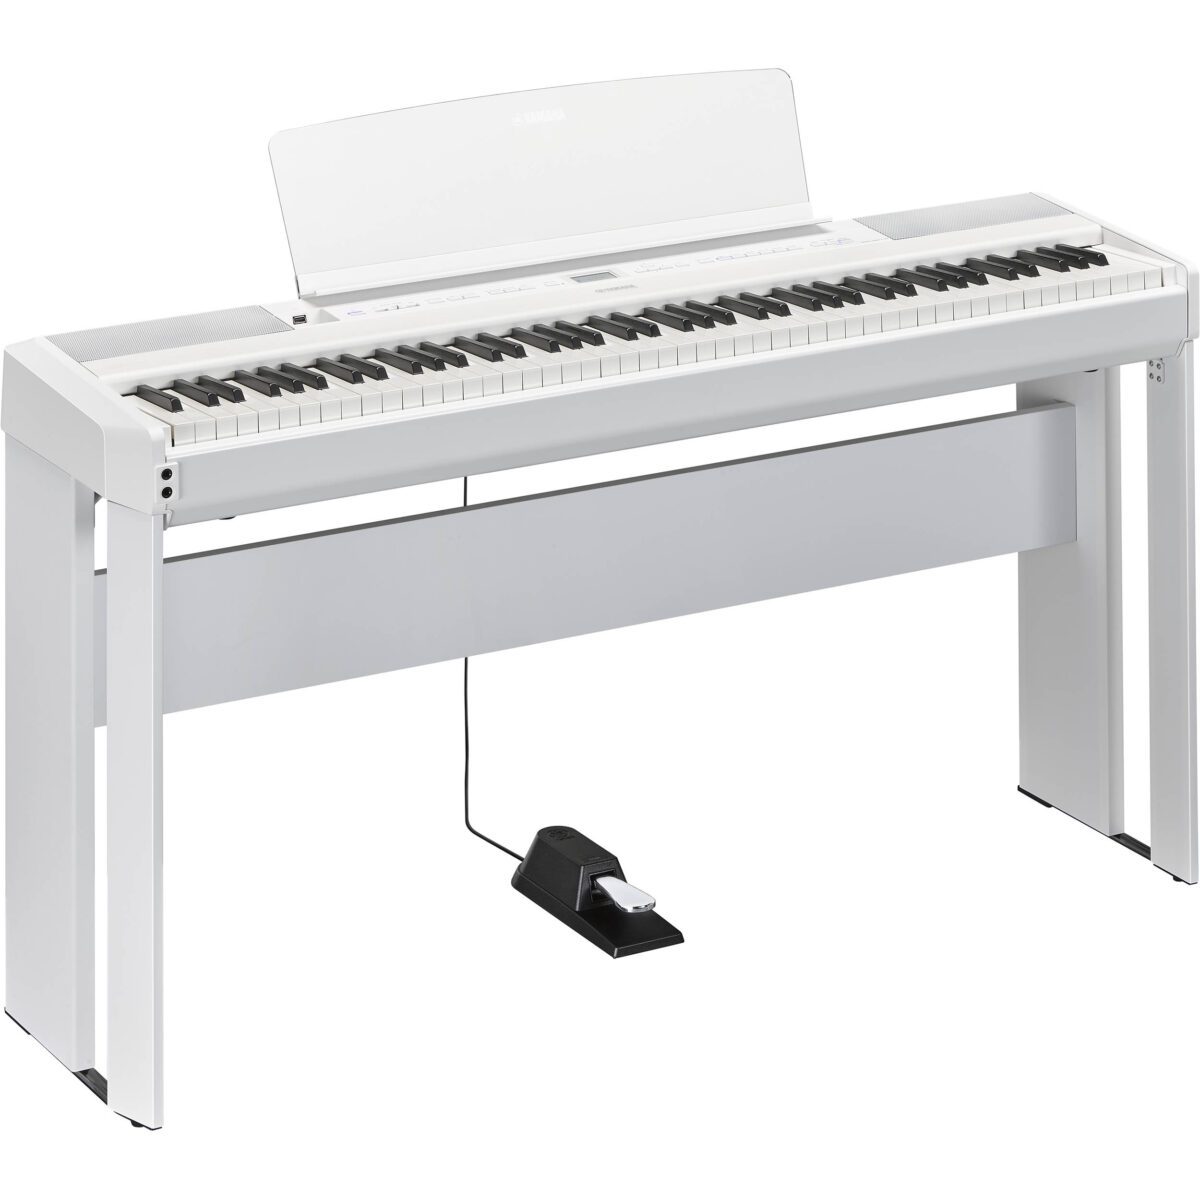 Yamaha P-515 88-Key Portable Digital Piano (White)